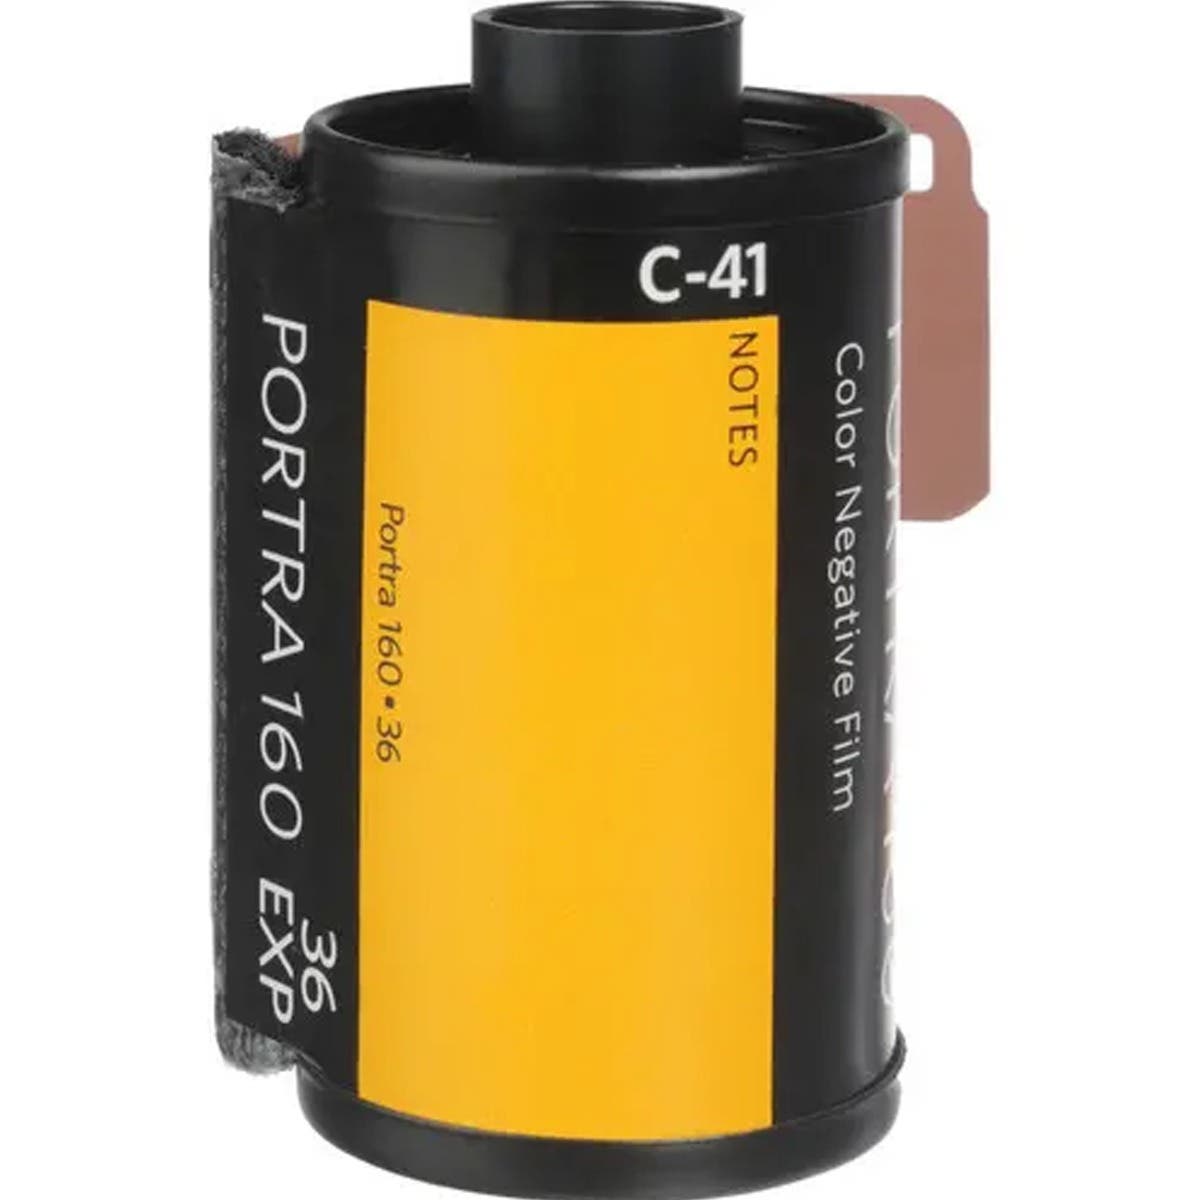 Kodak Professional Portra 160 Colour Negative Film (35mm Roll Film, 36 Exposures)